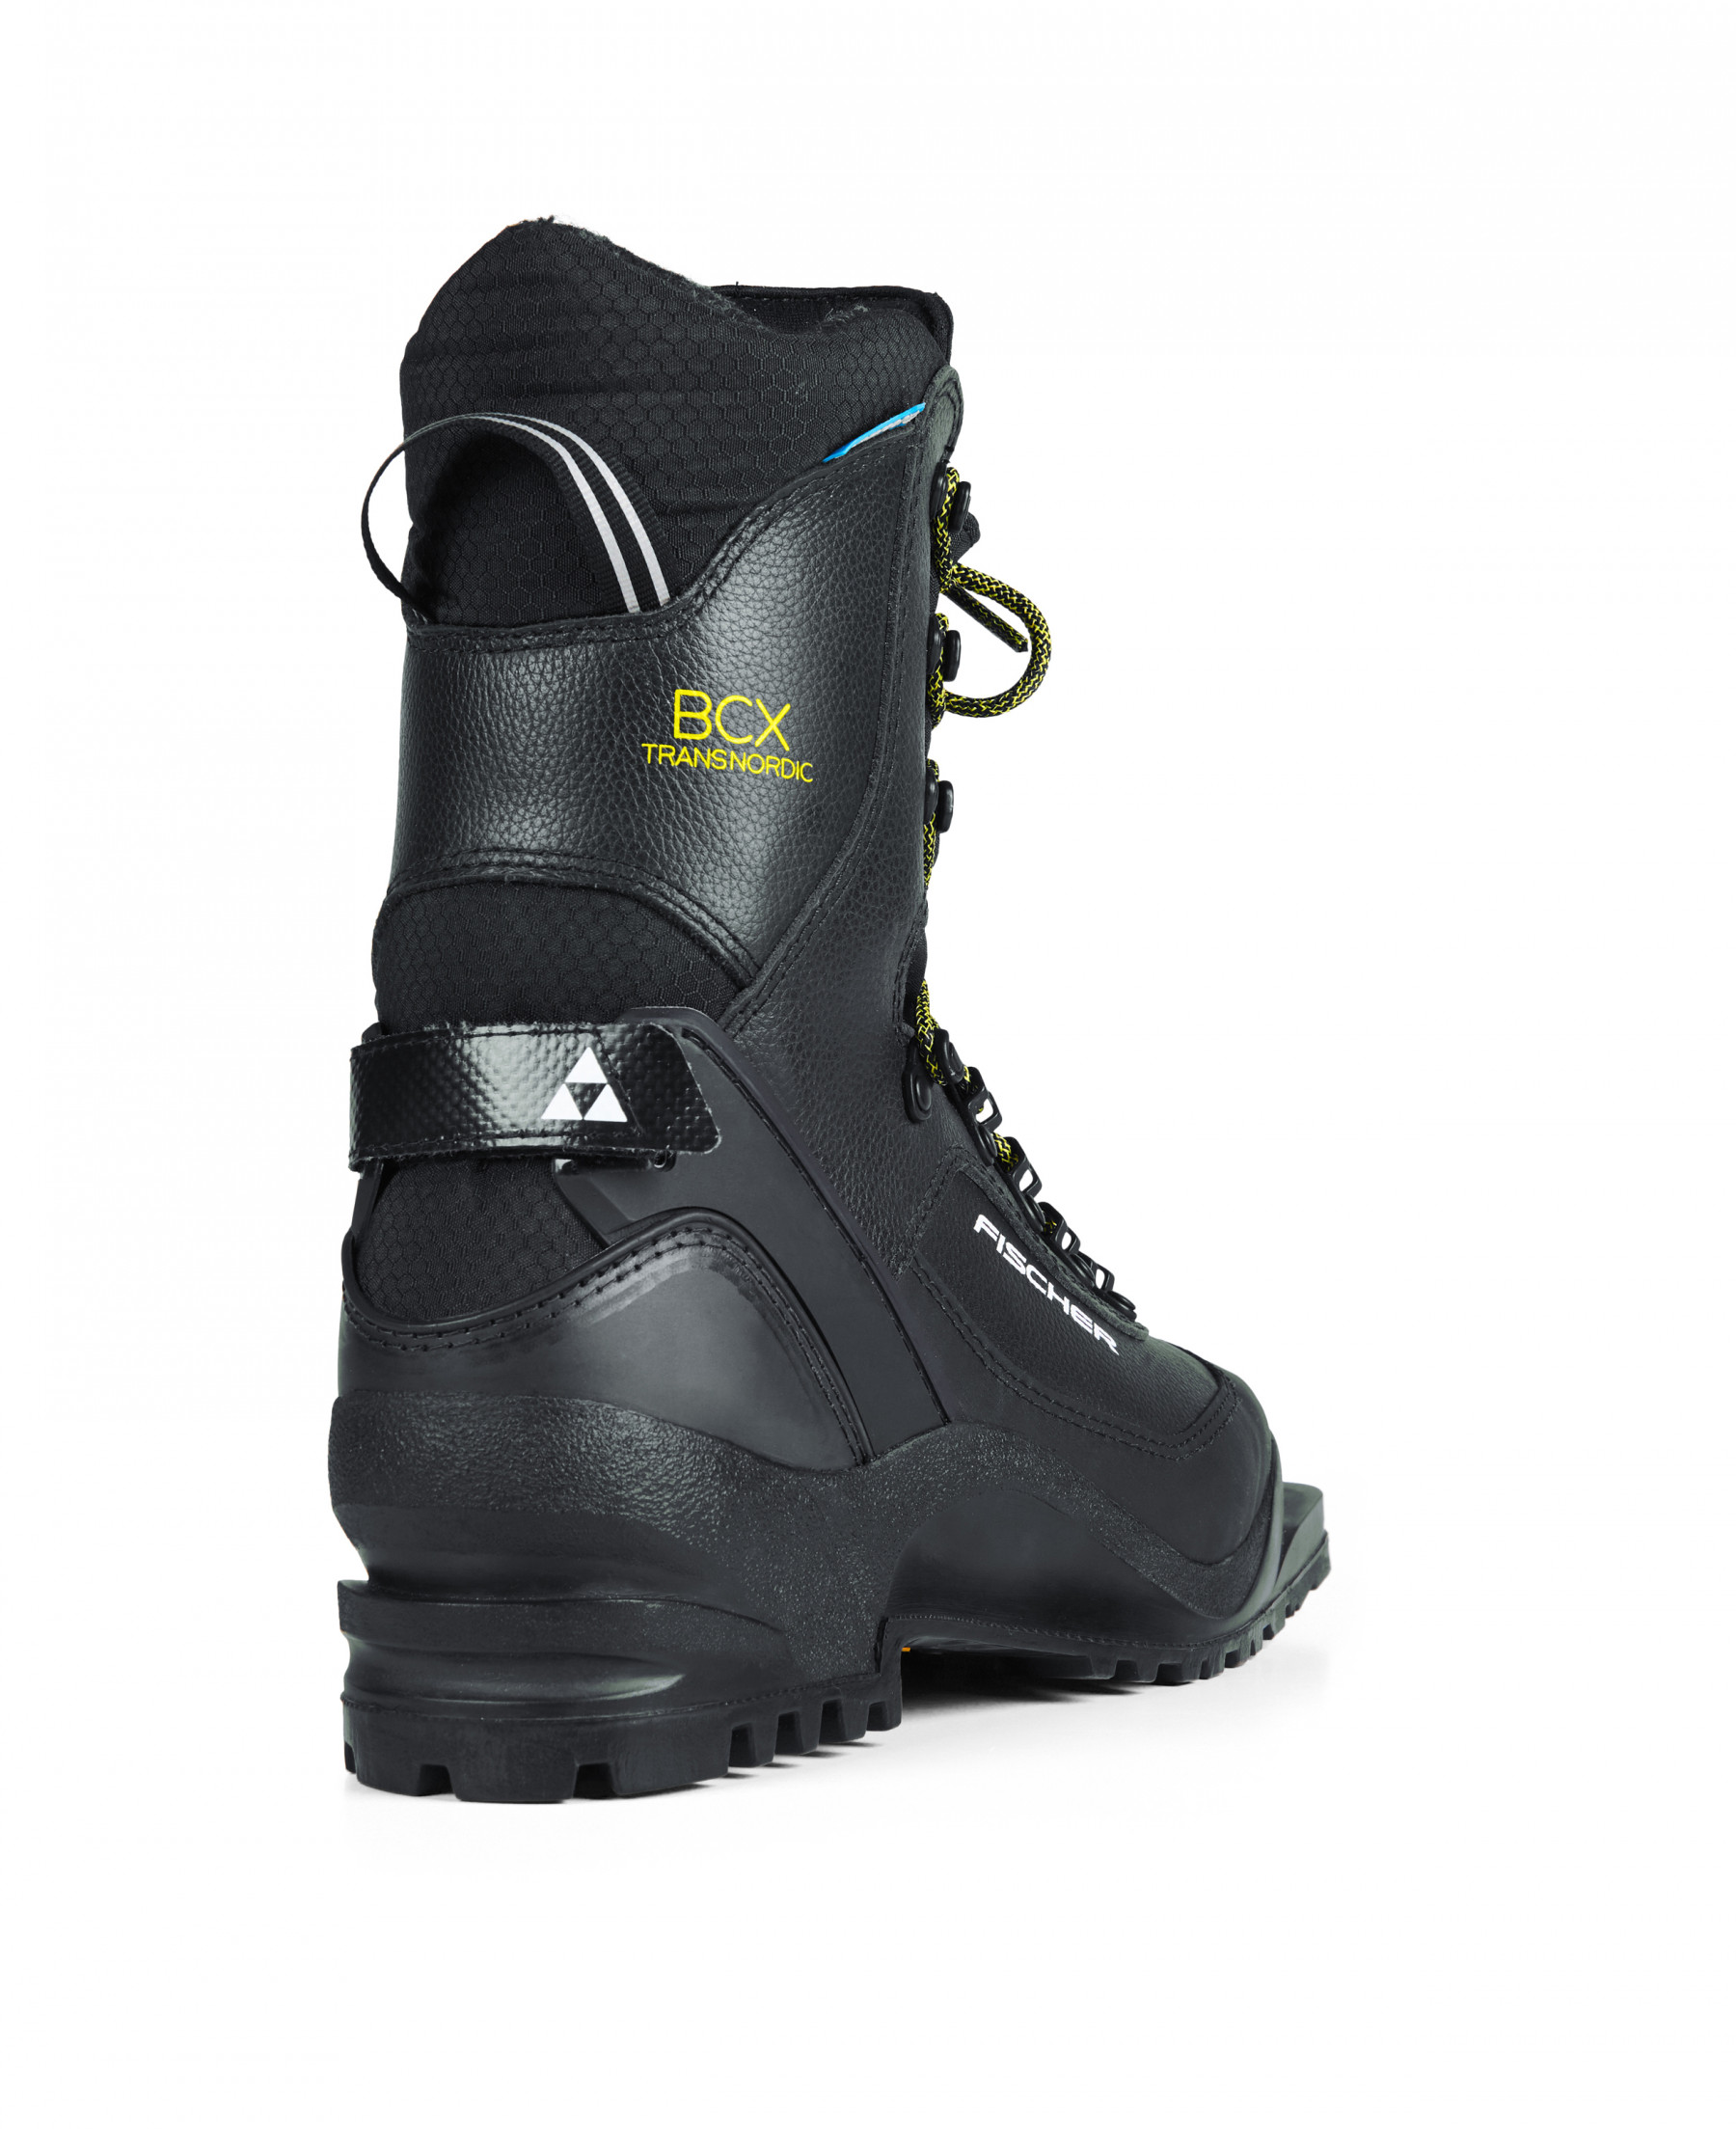 Fischer BCX Transnordic 75 Waterproof: Nordic Backcountry ski boots